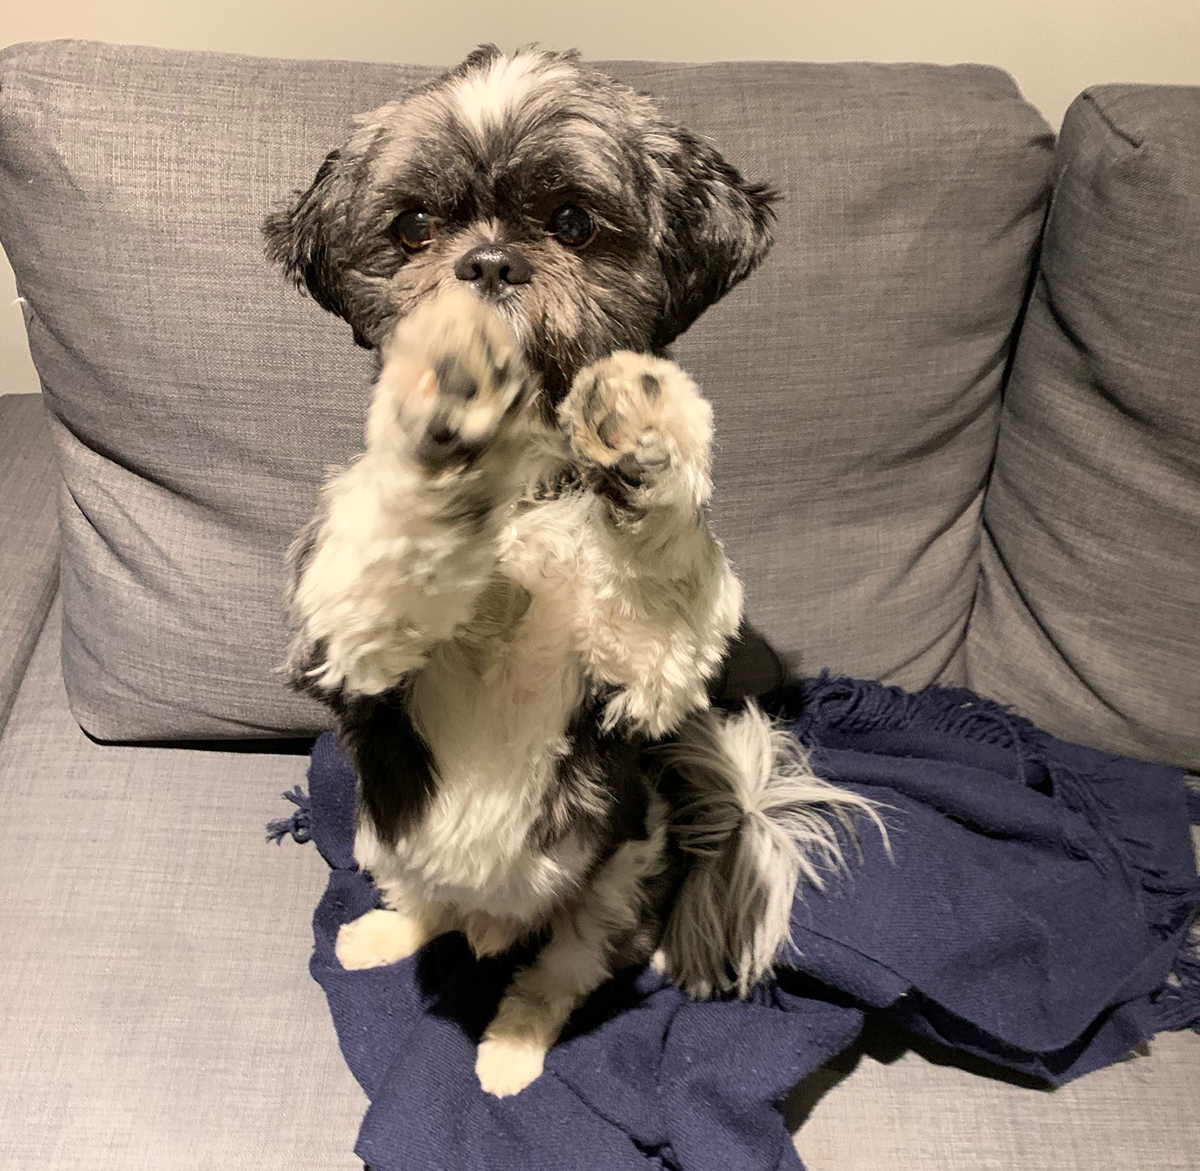 dog named Paddington on couch holding up paws